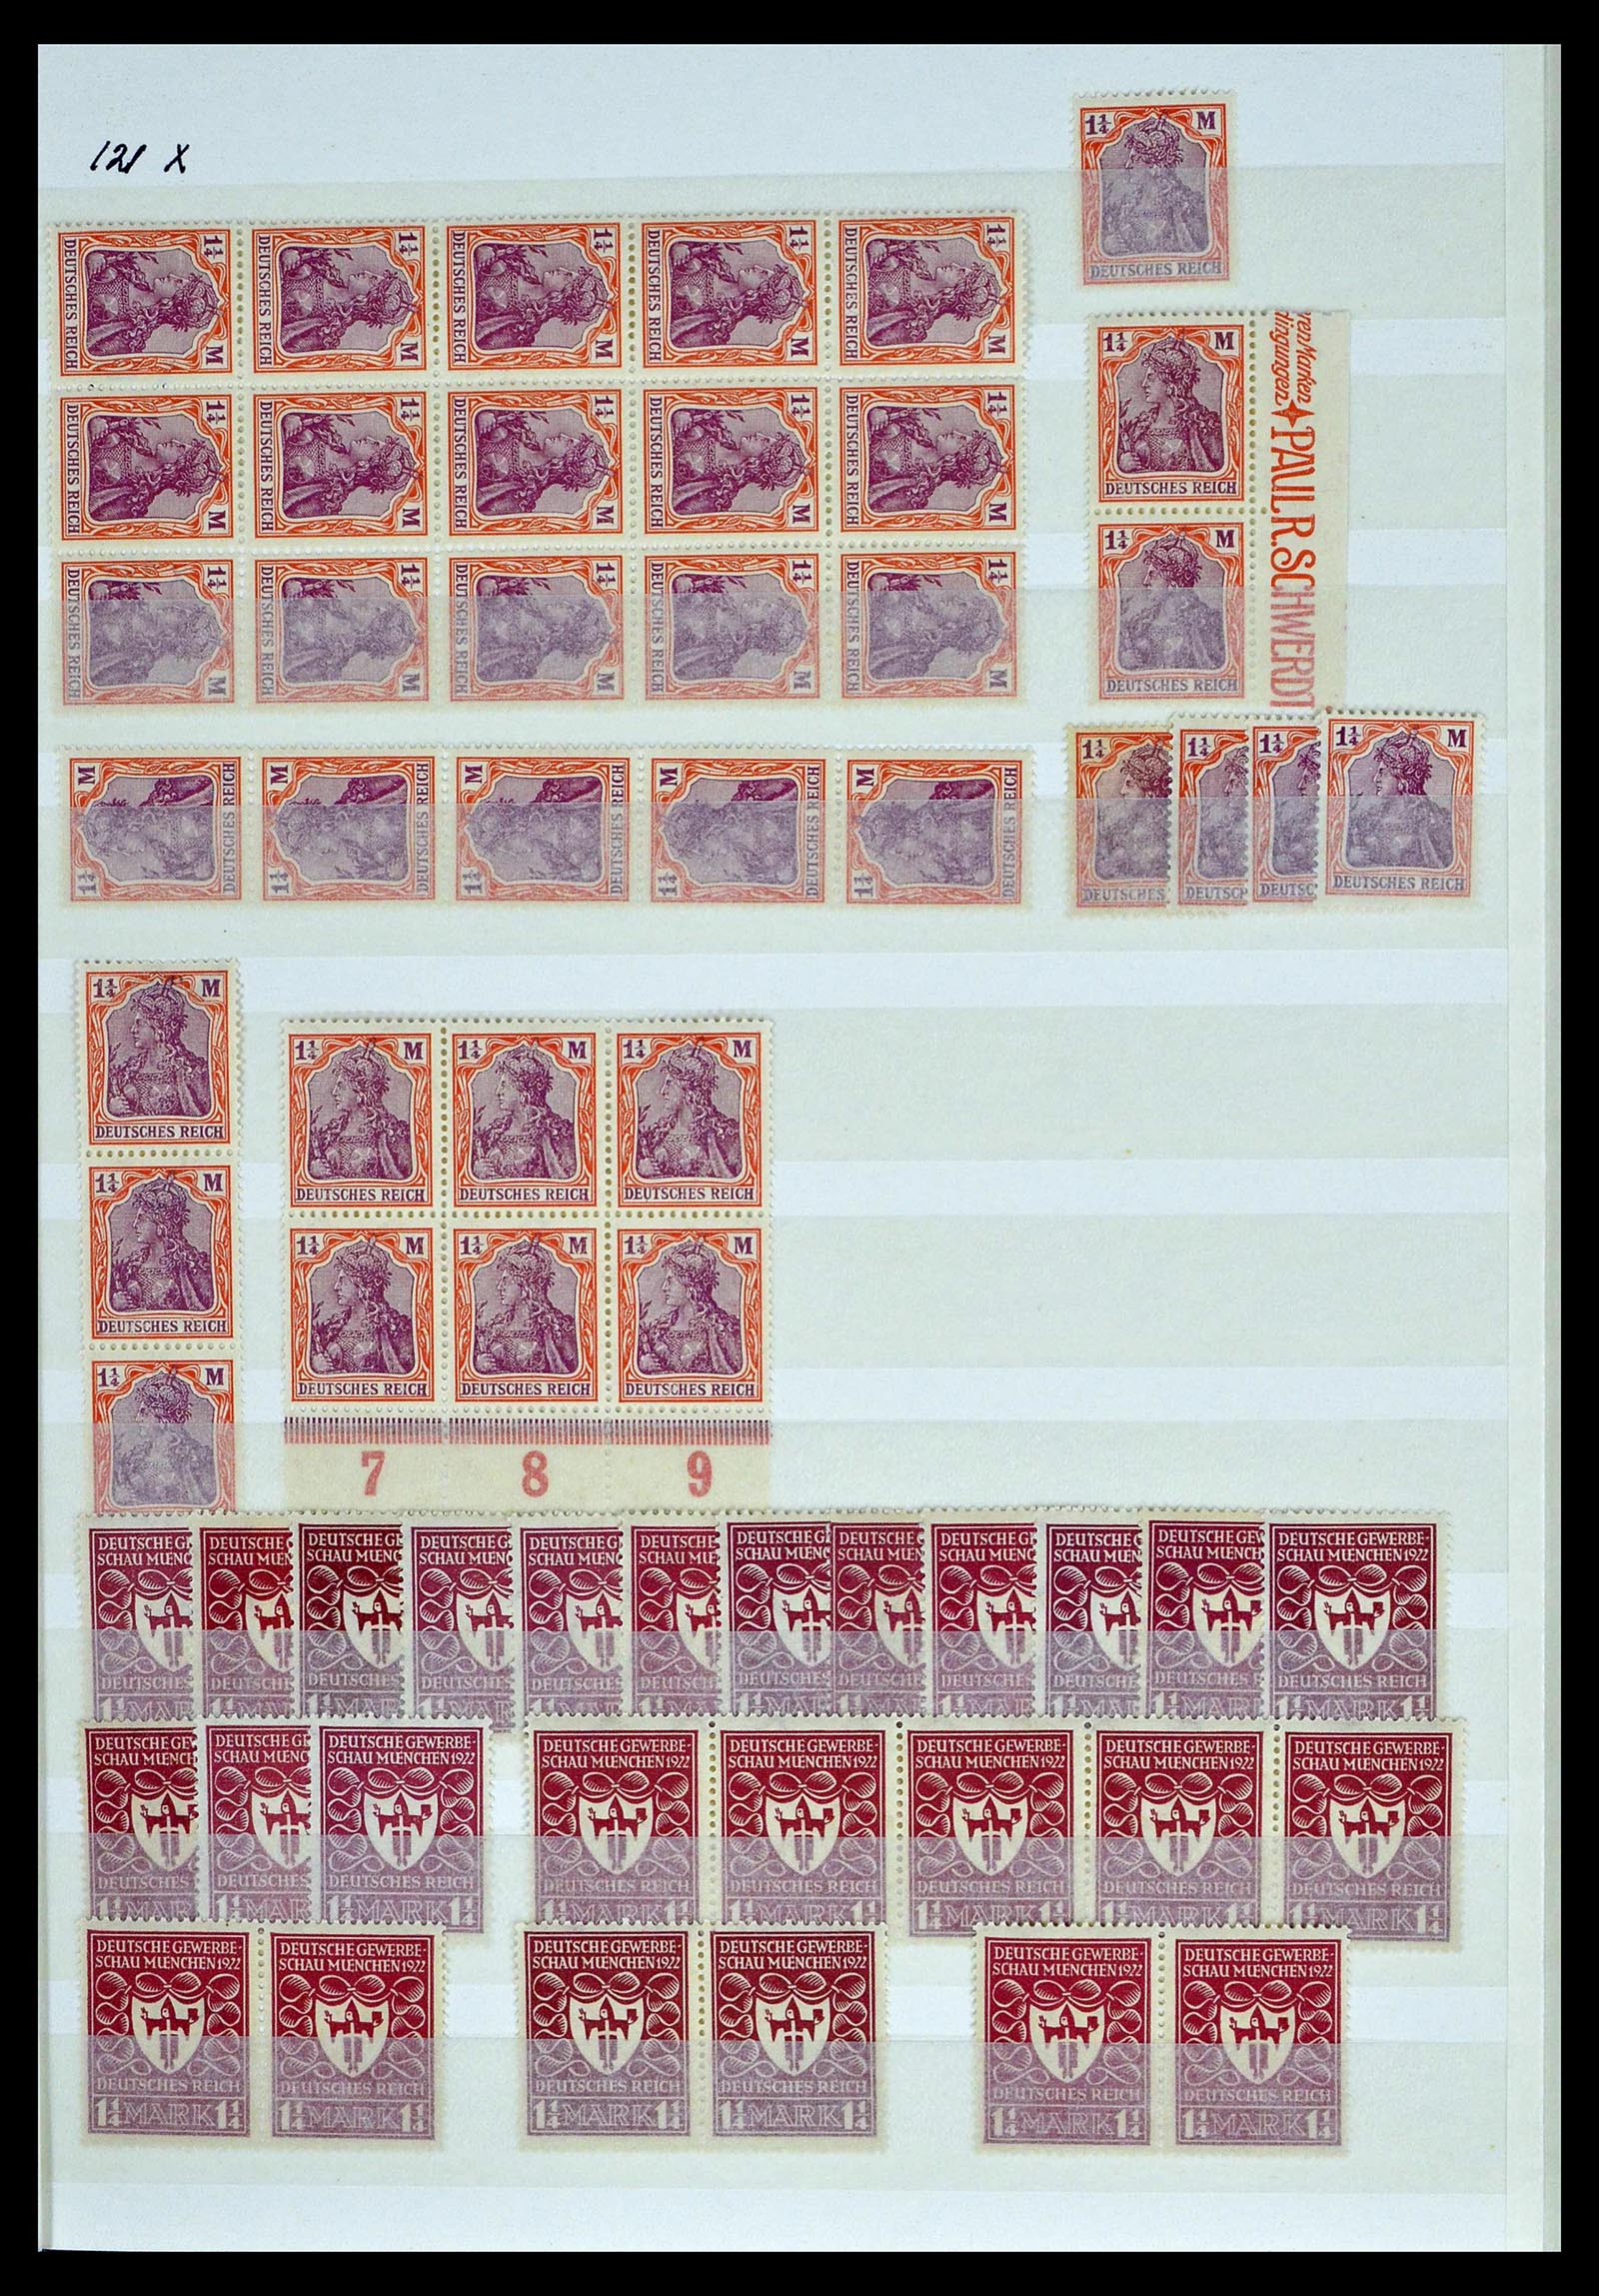 39256 0021 - Stamp collection 39256 German Reich MNH.